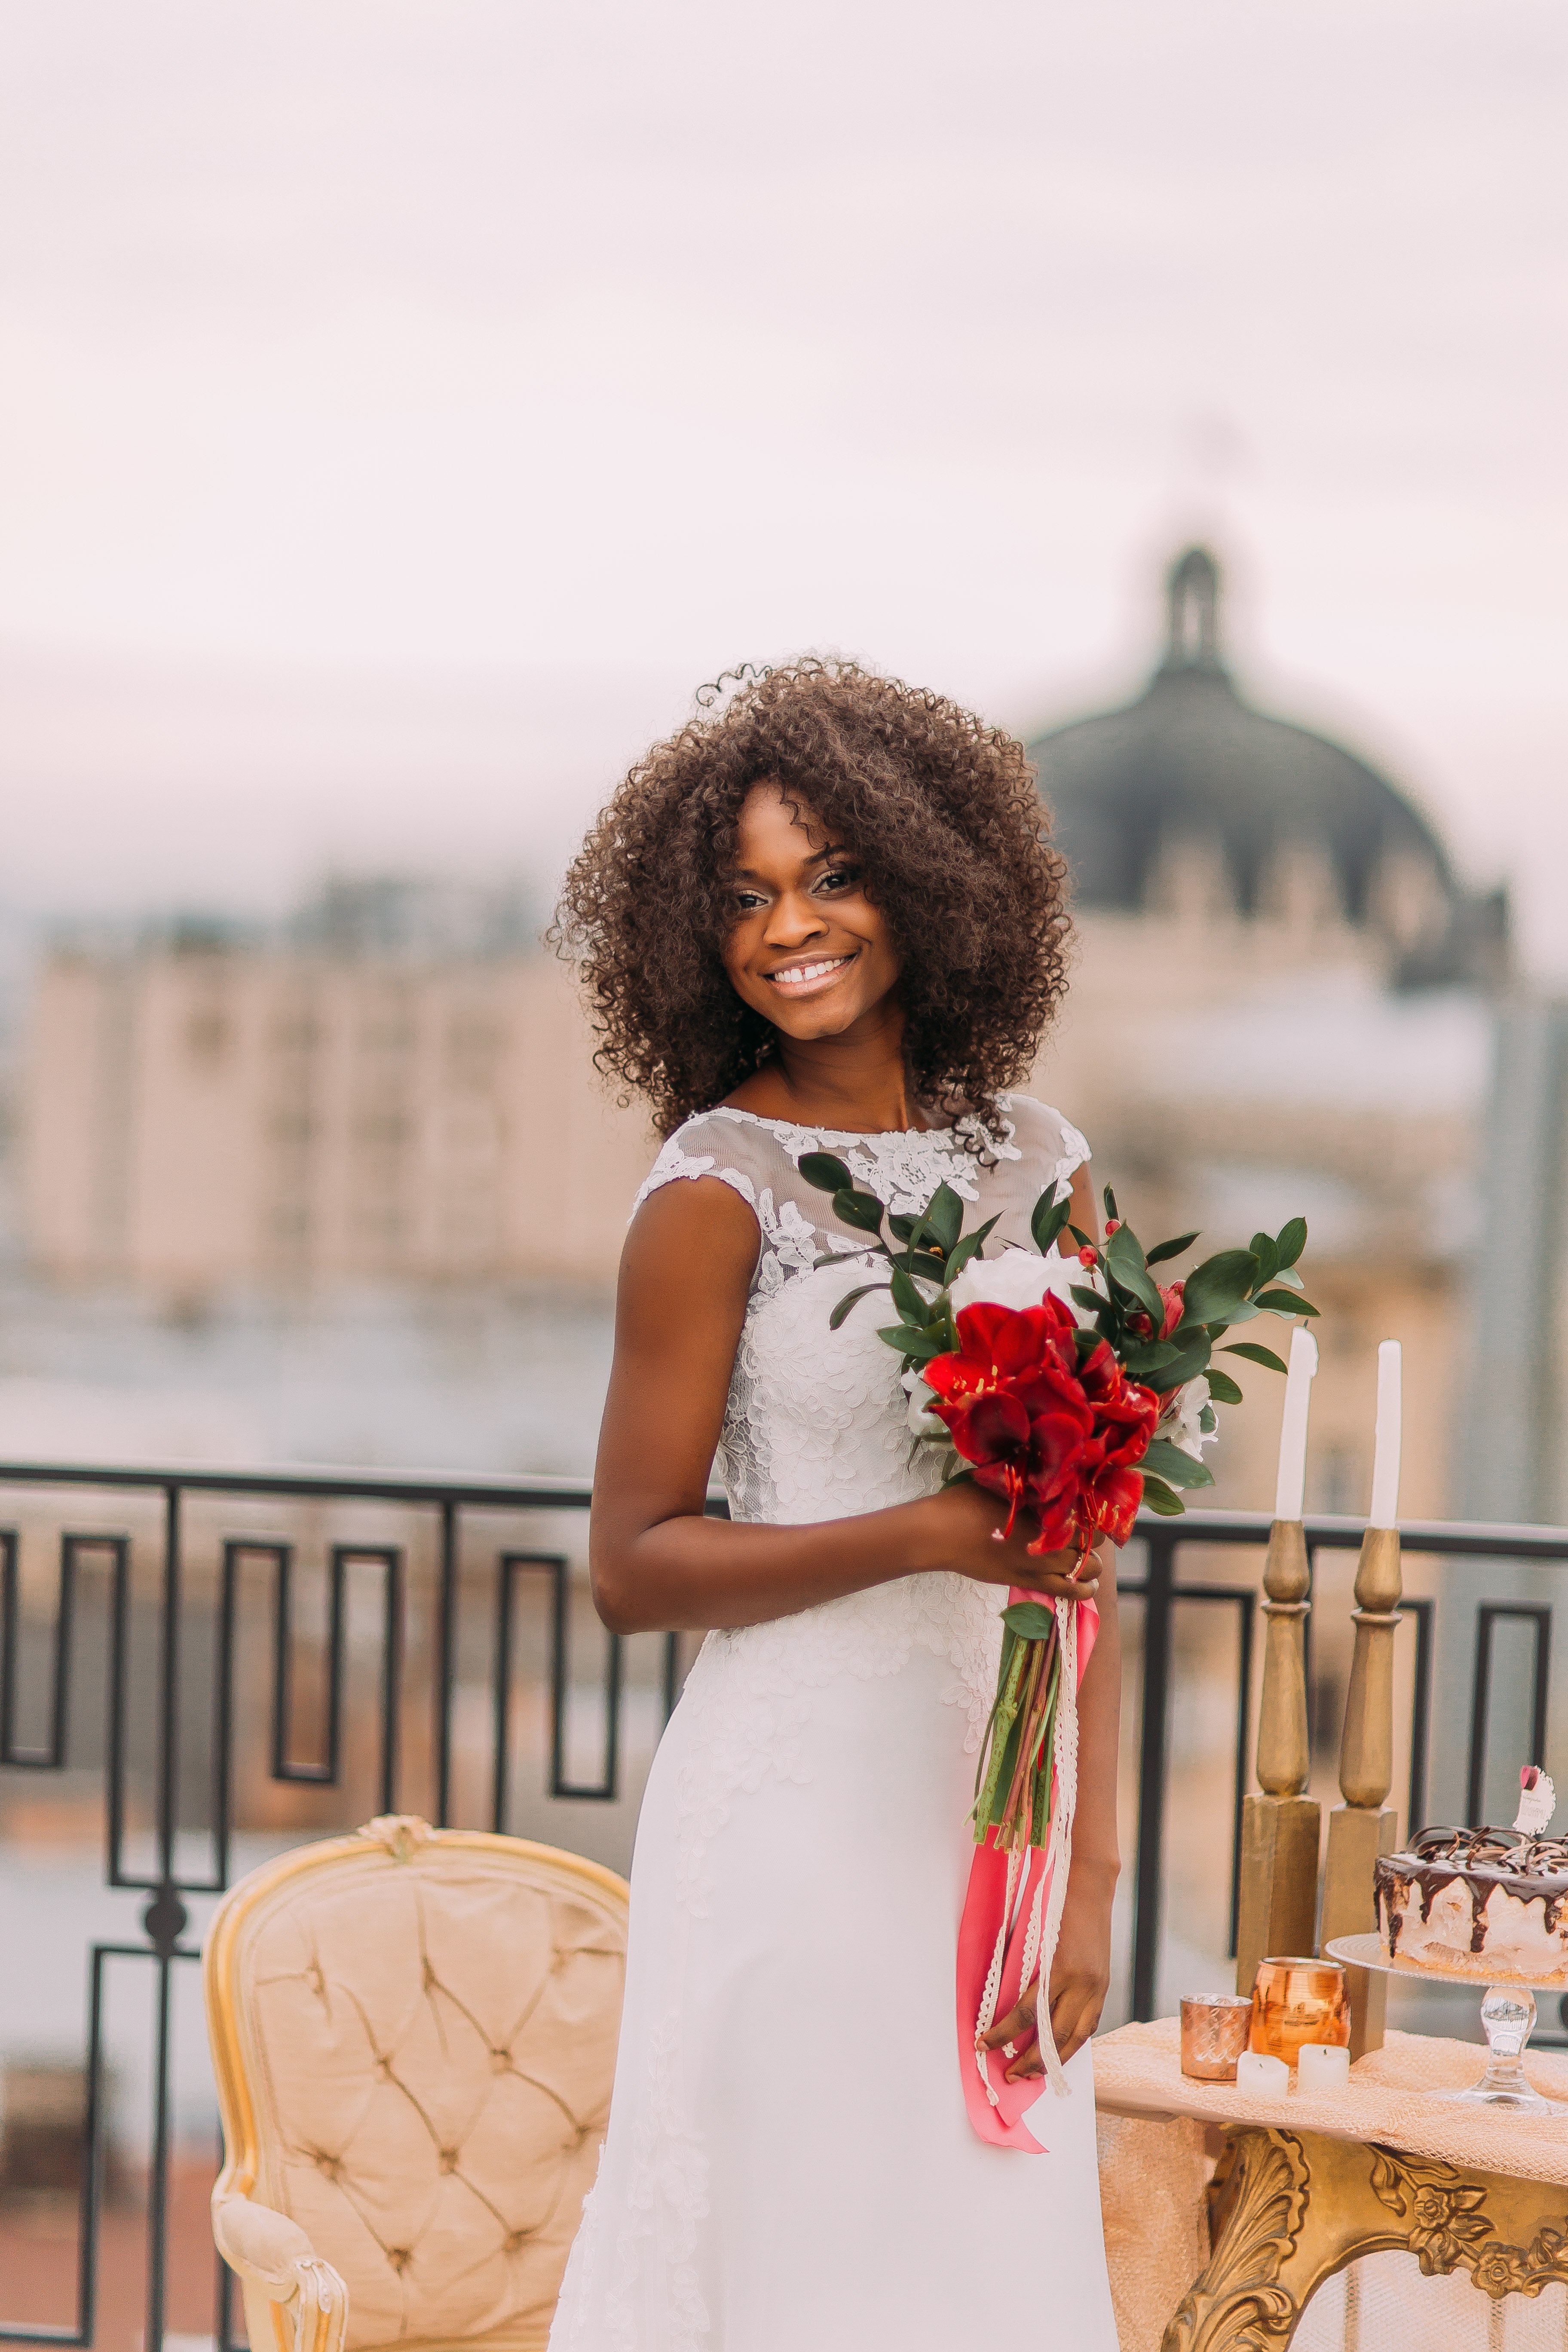 A bride | Source: Shutterstock